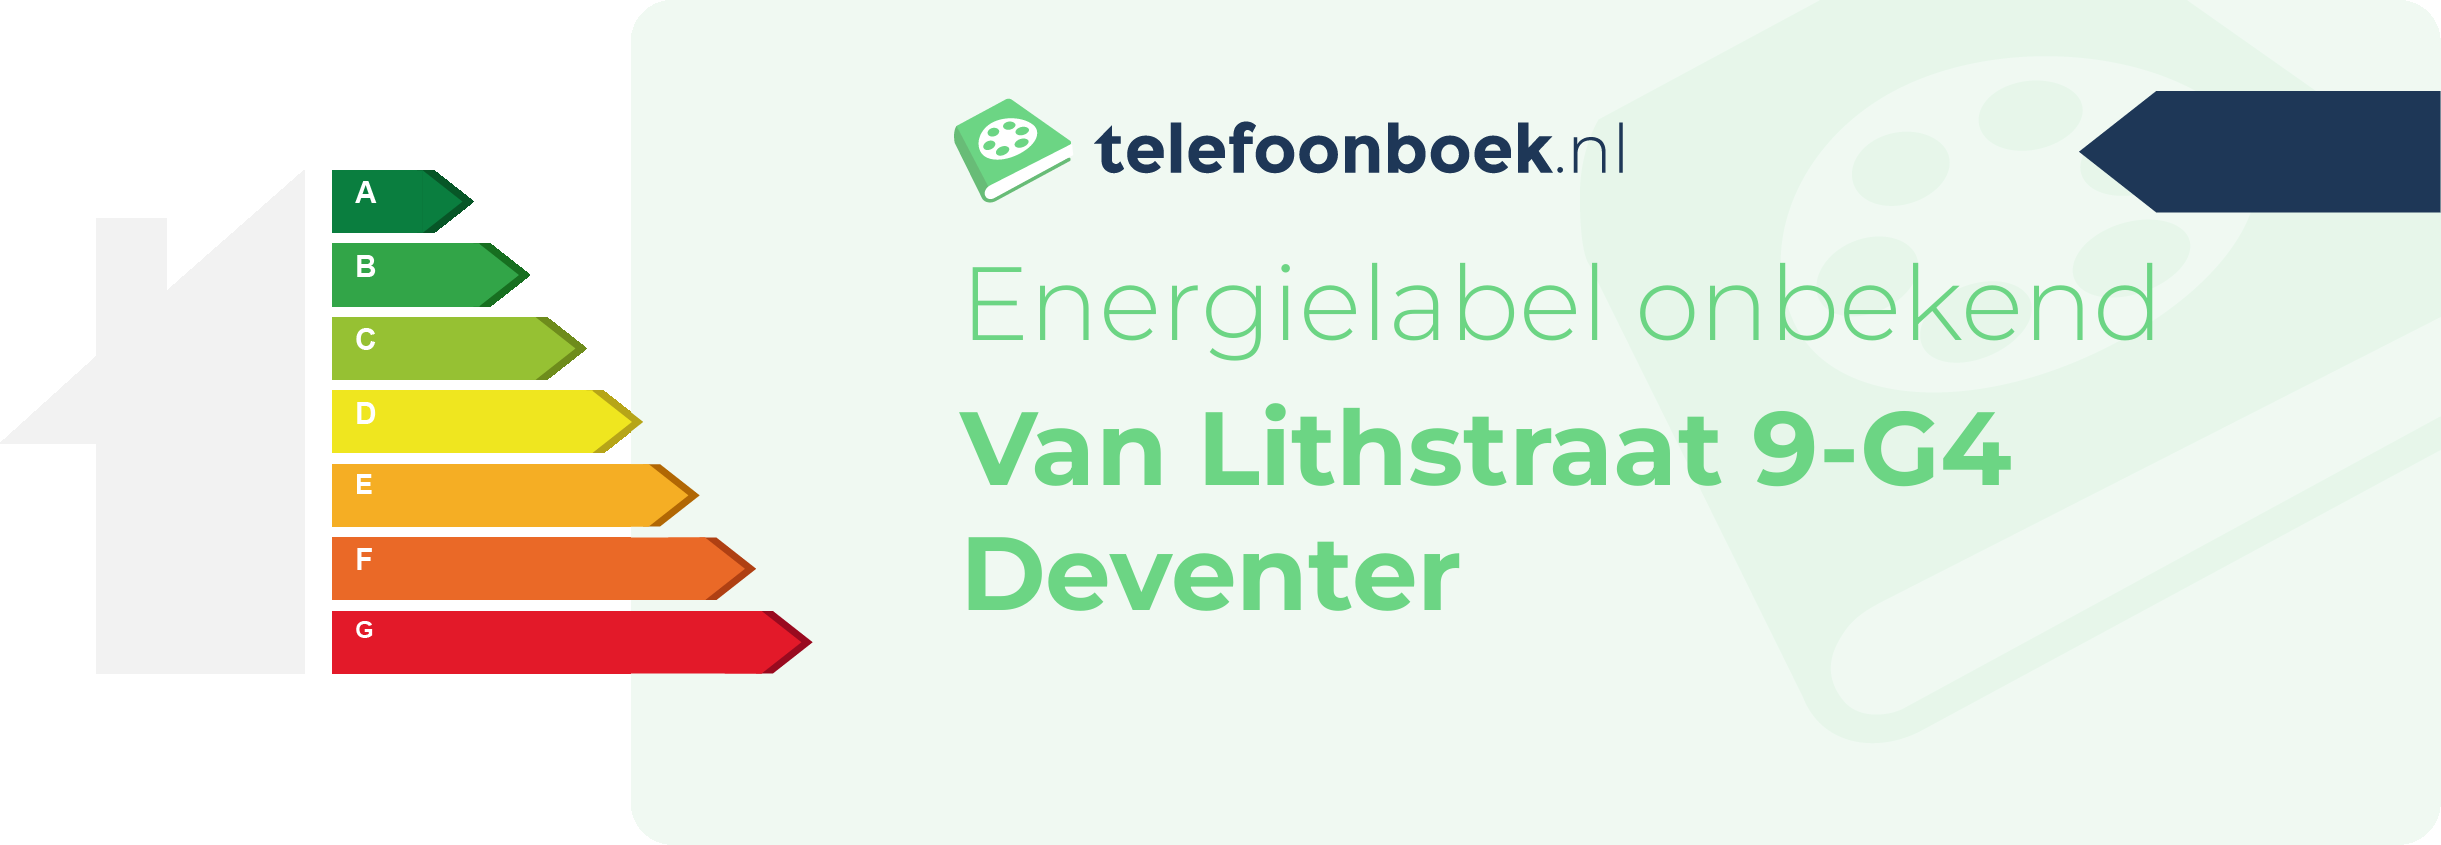 Energielabel Van Lithstraat 9-G4 Deventer